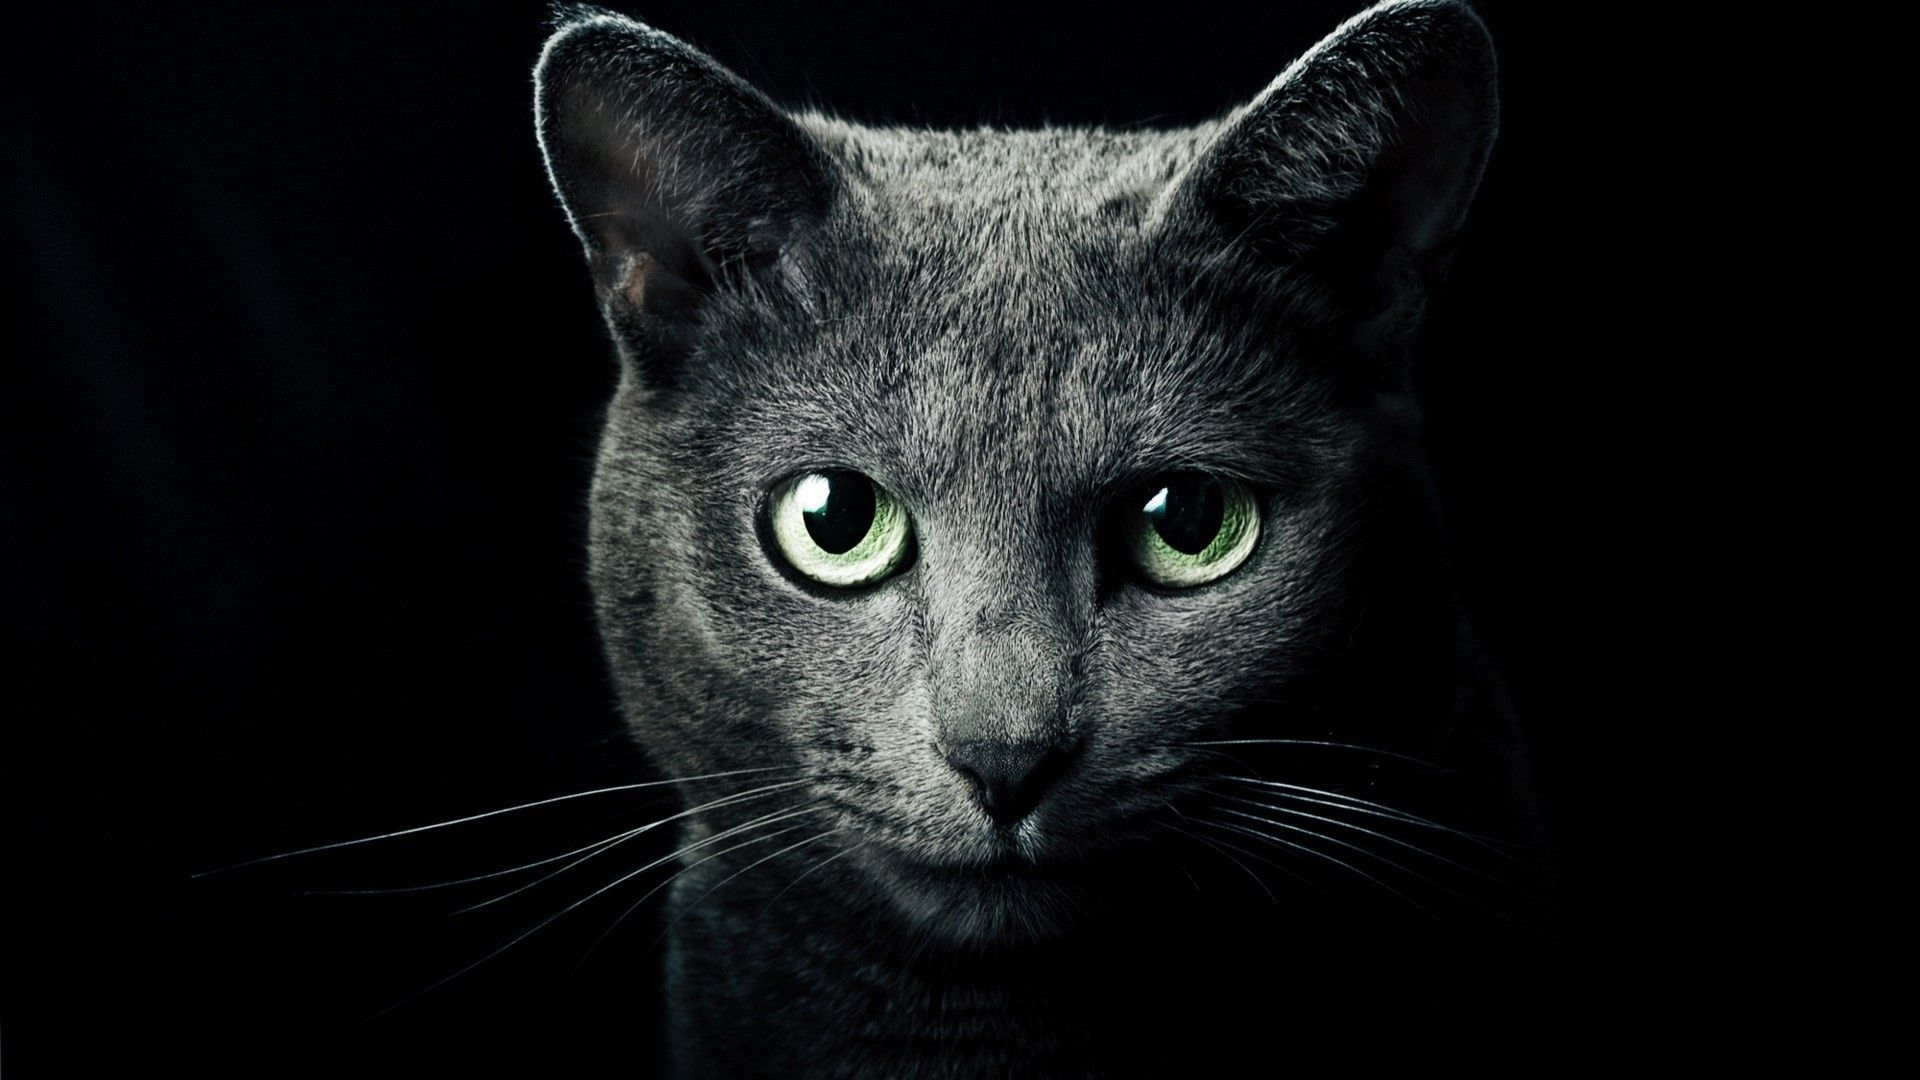 Fondos de Russian Blue Cat - Los mejores fondos de Russian Blue Cat